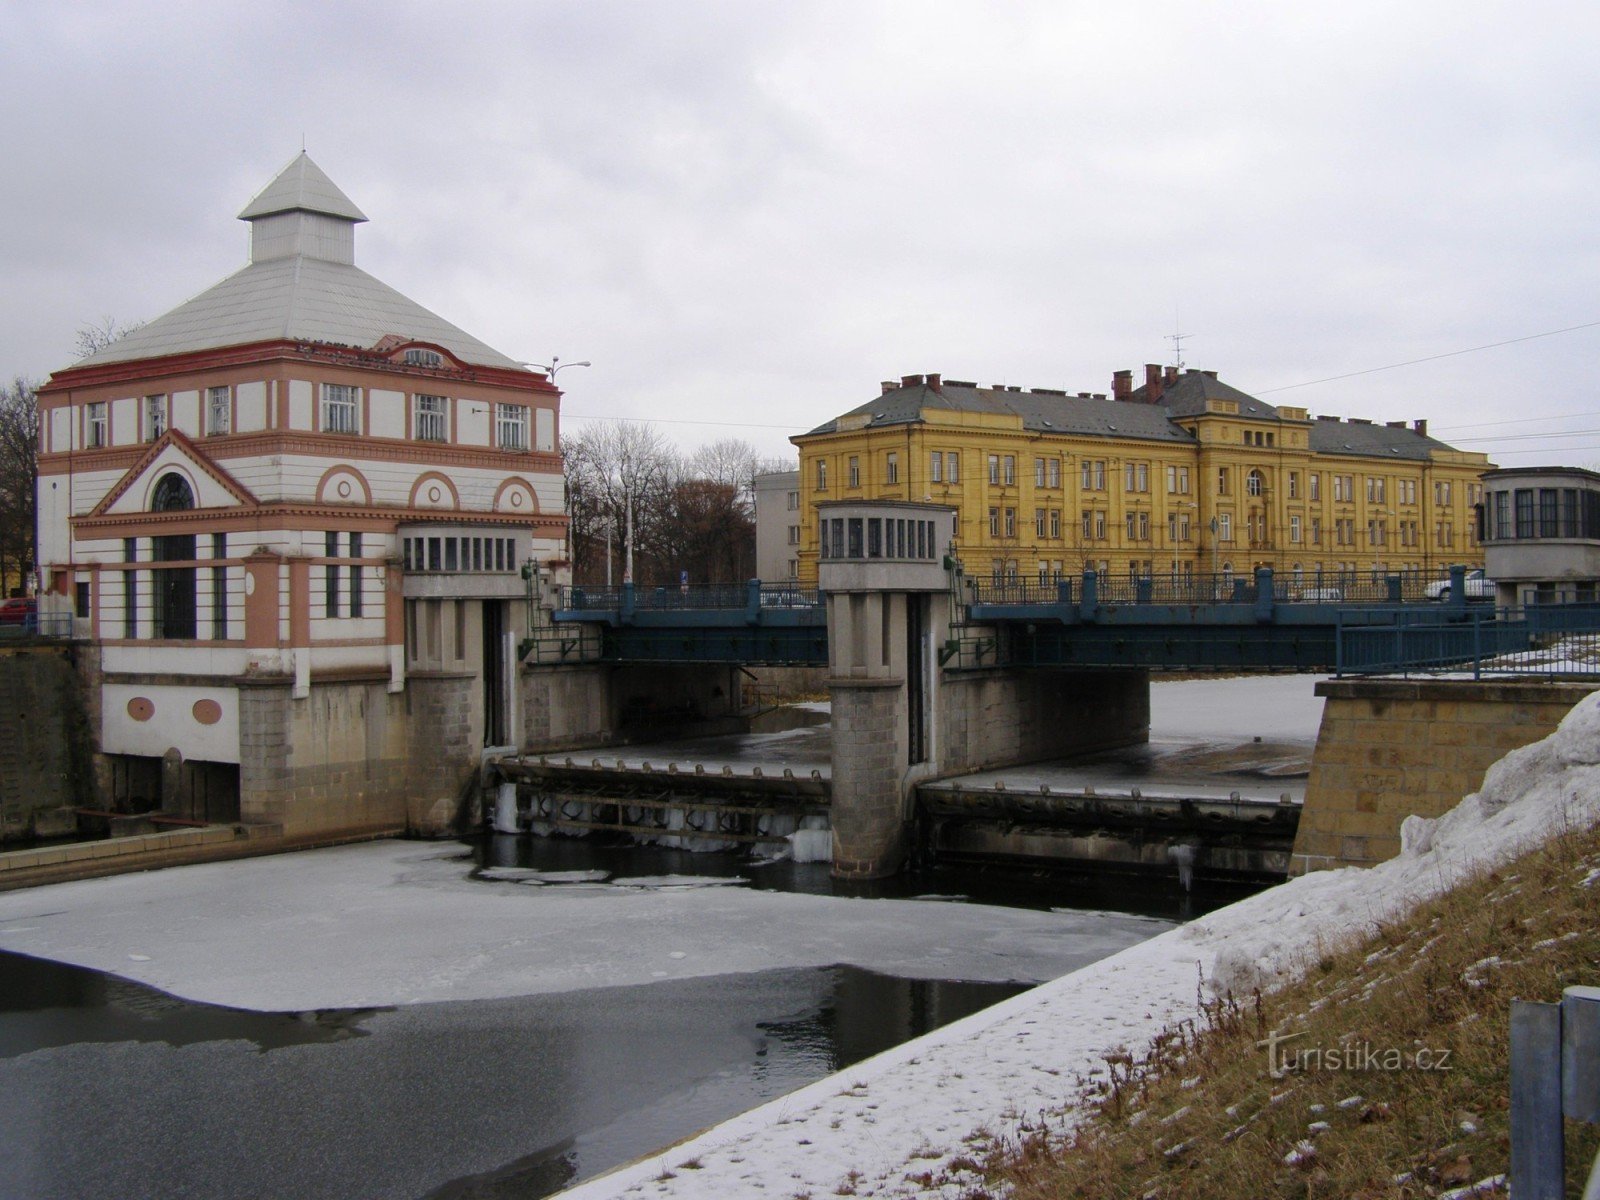 Moravský jez - nhà máy thủy điện trên Orlica